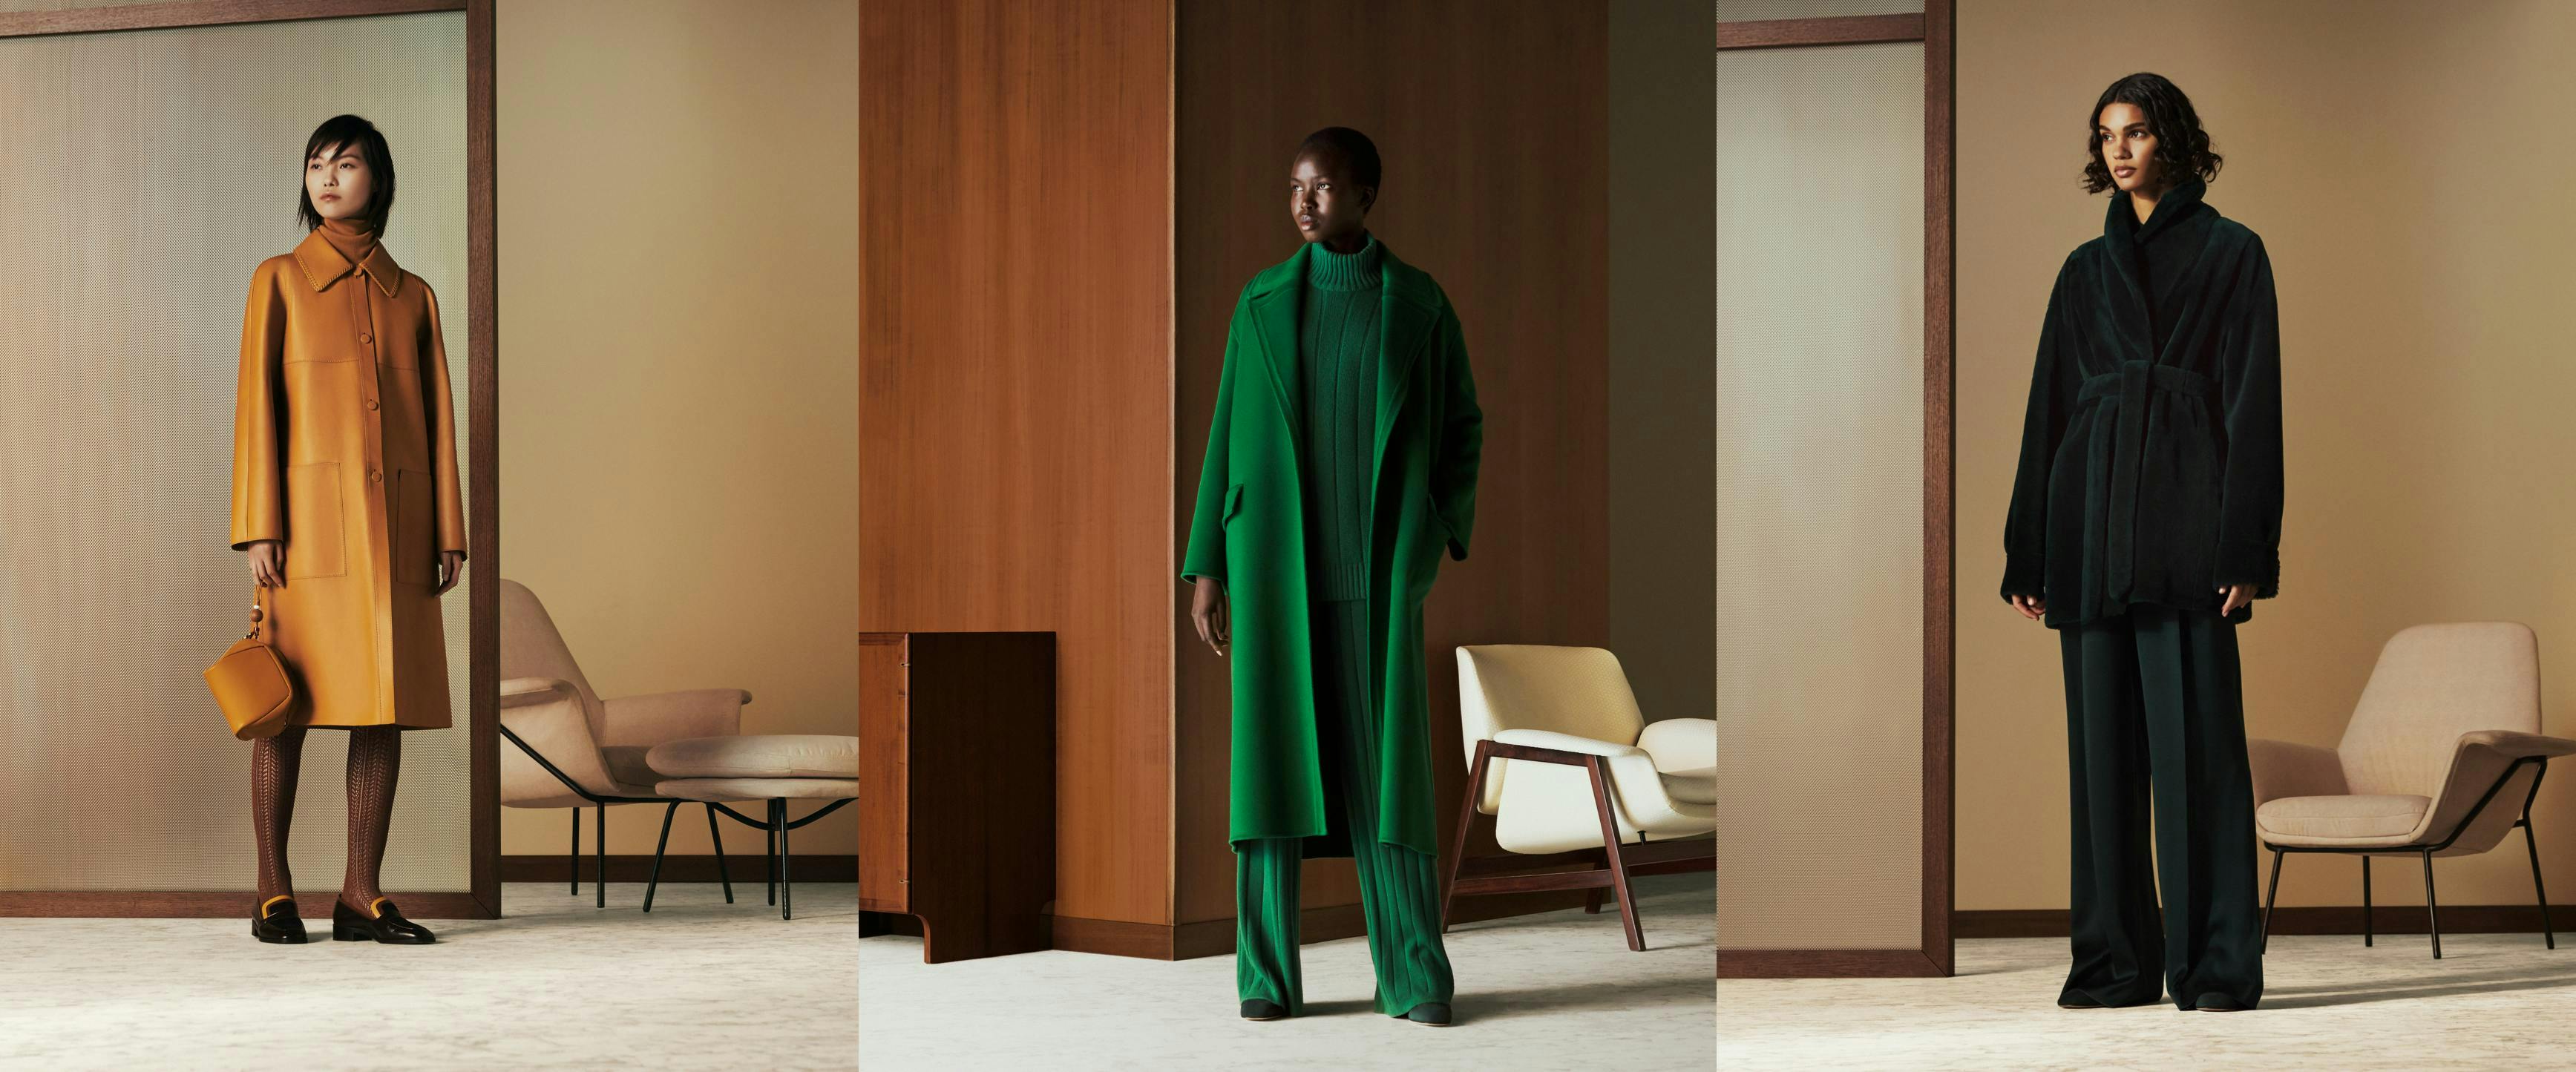 clothing apparel flooring person human chair furniture overcoat coat floor